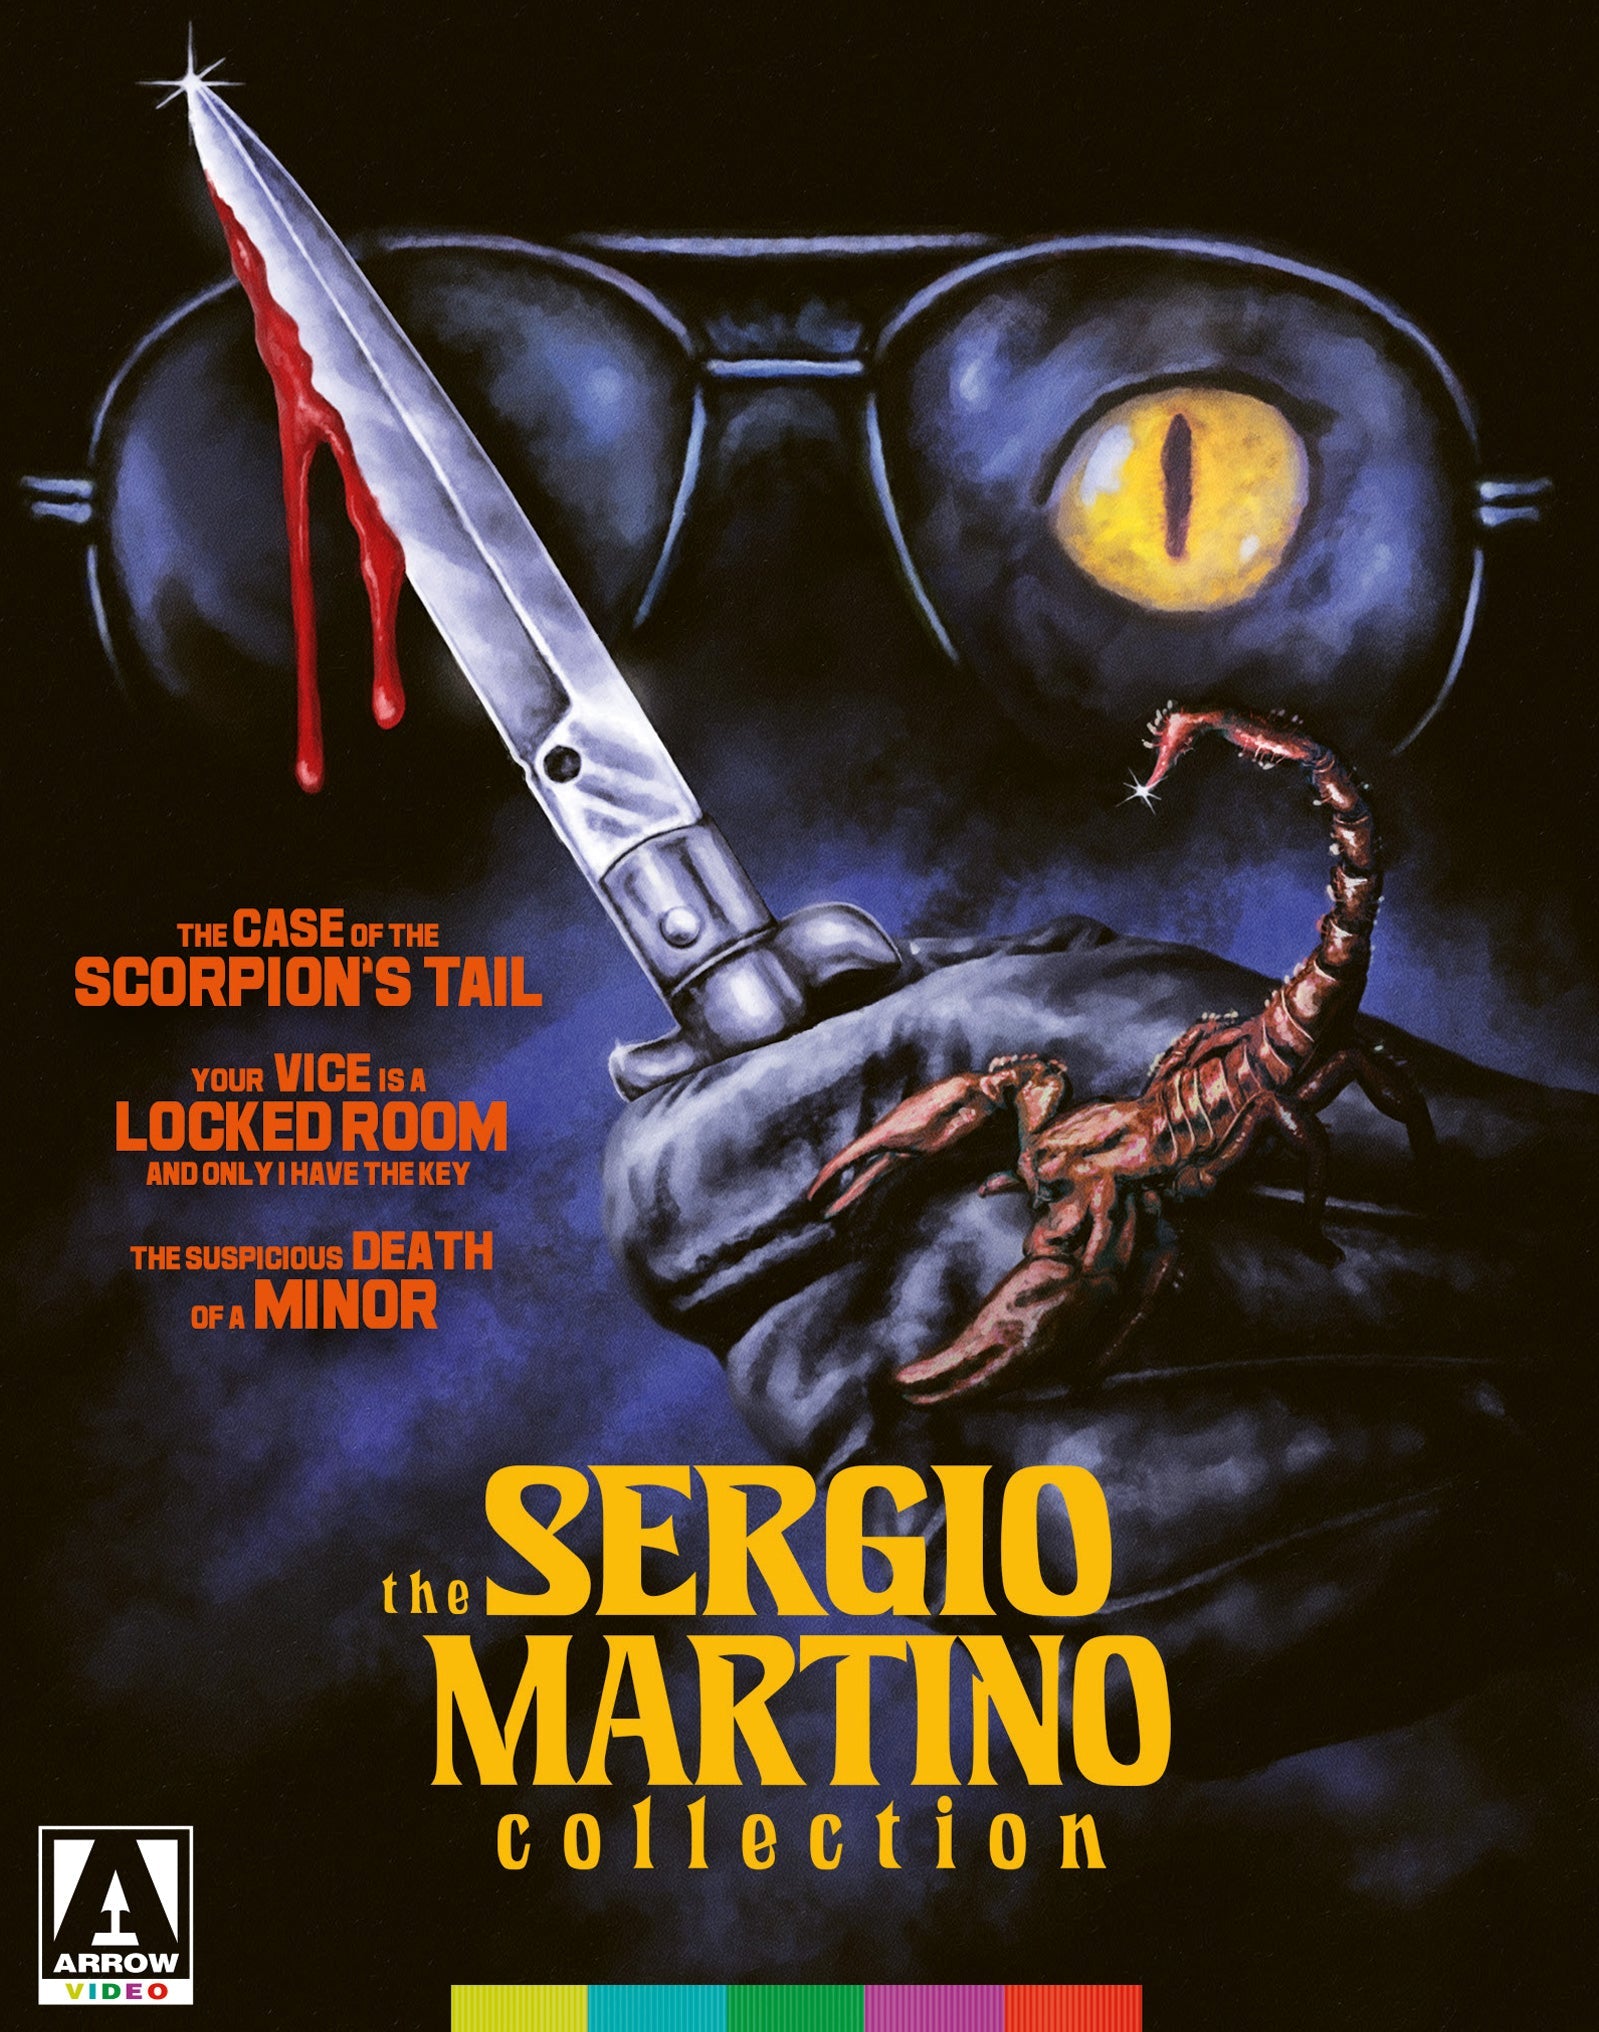 The Sergio Martino Collection Blu-Ray Blu-Ray